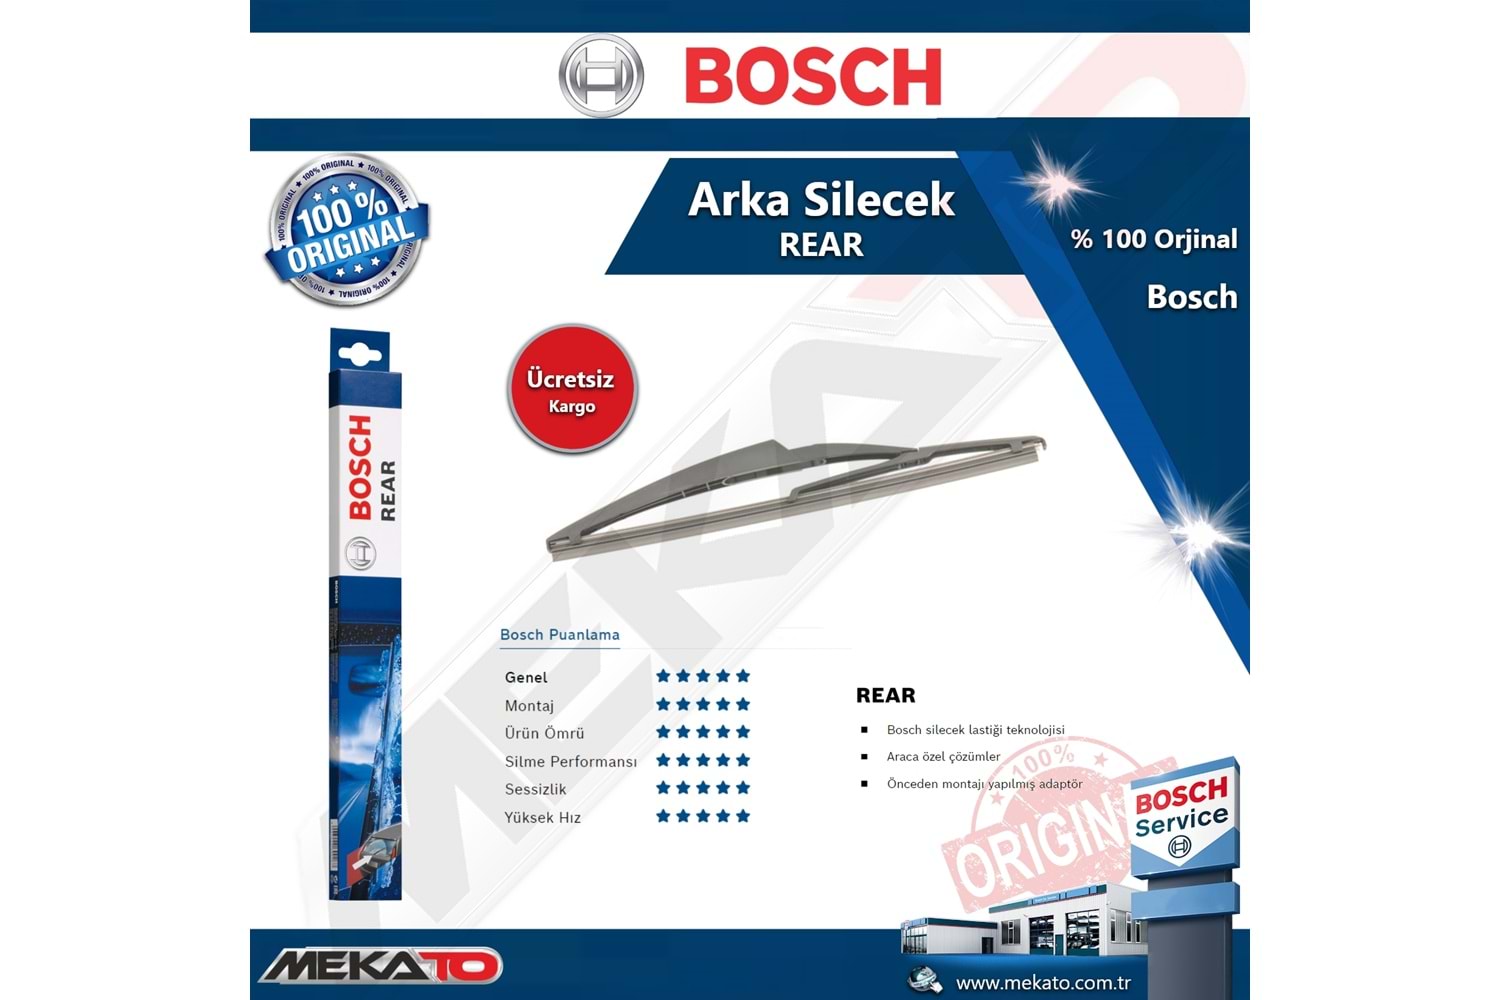 Citroen C3 Picasso Arka Silecek Bosch Rear 2010-2020